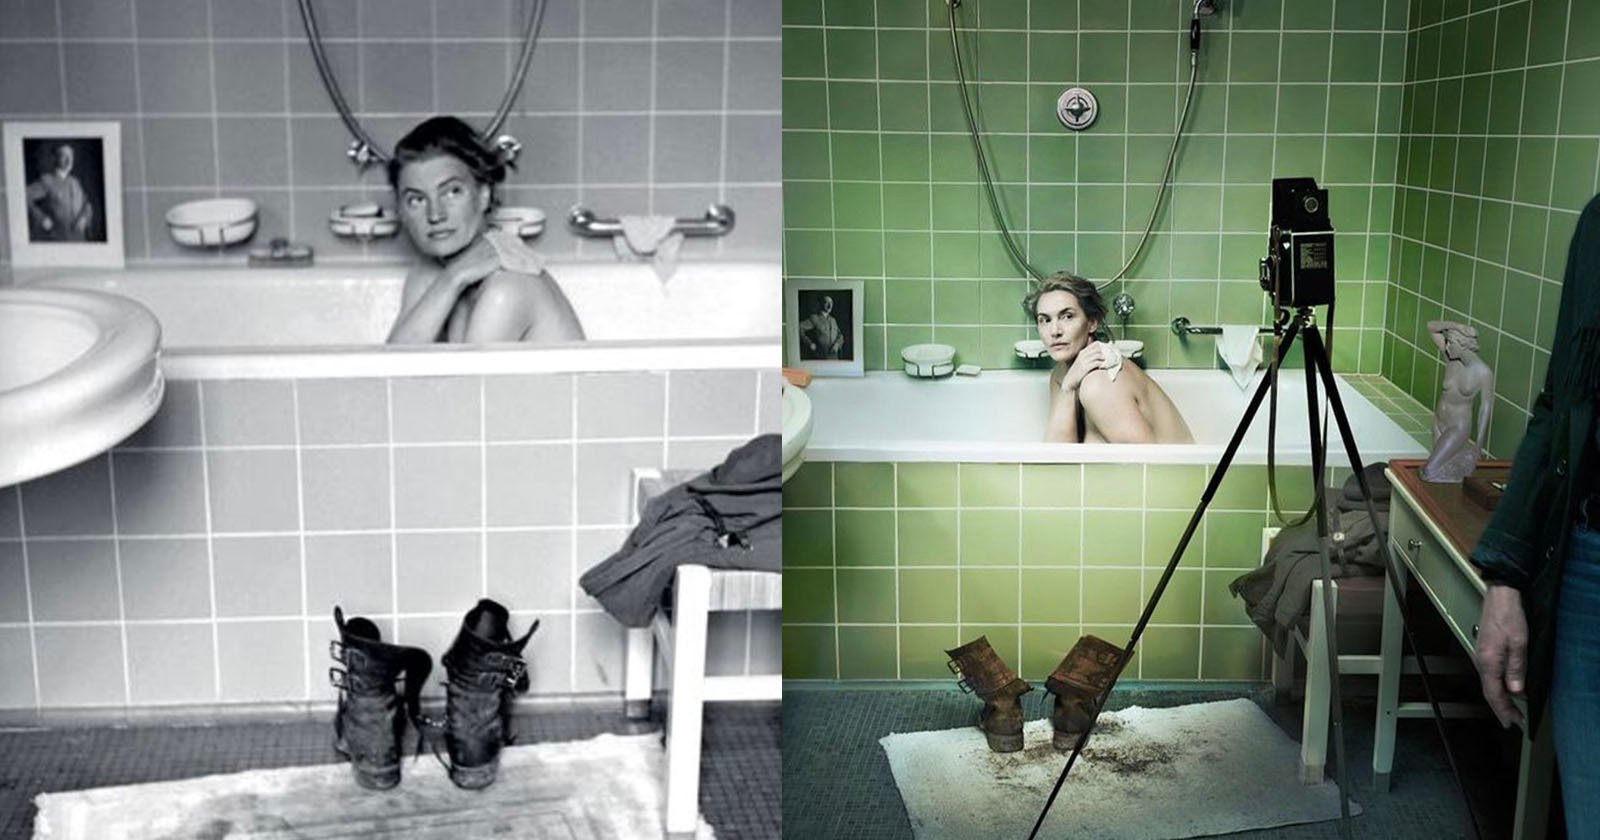  annie leibovitz recreates photo lee miller hitler bathtub 